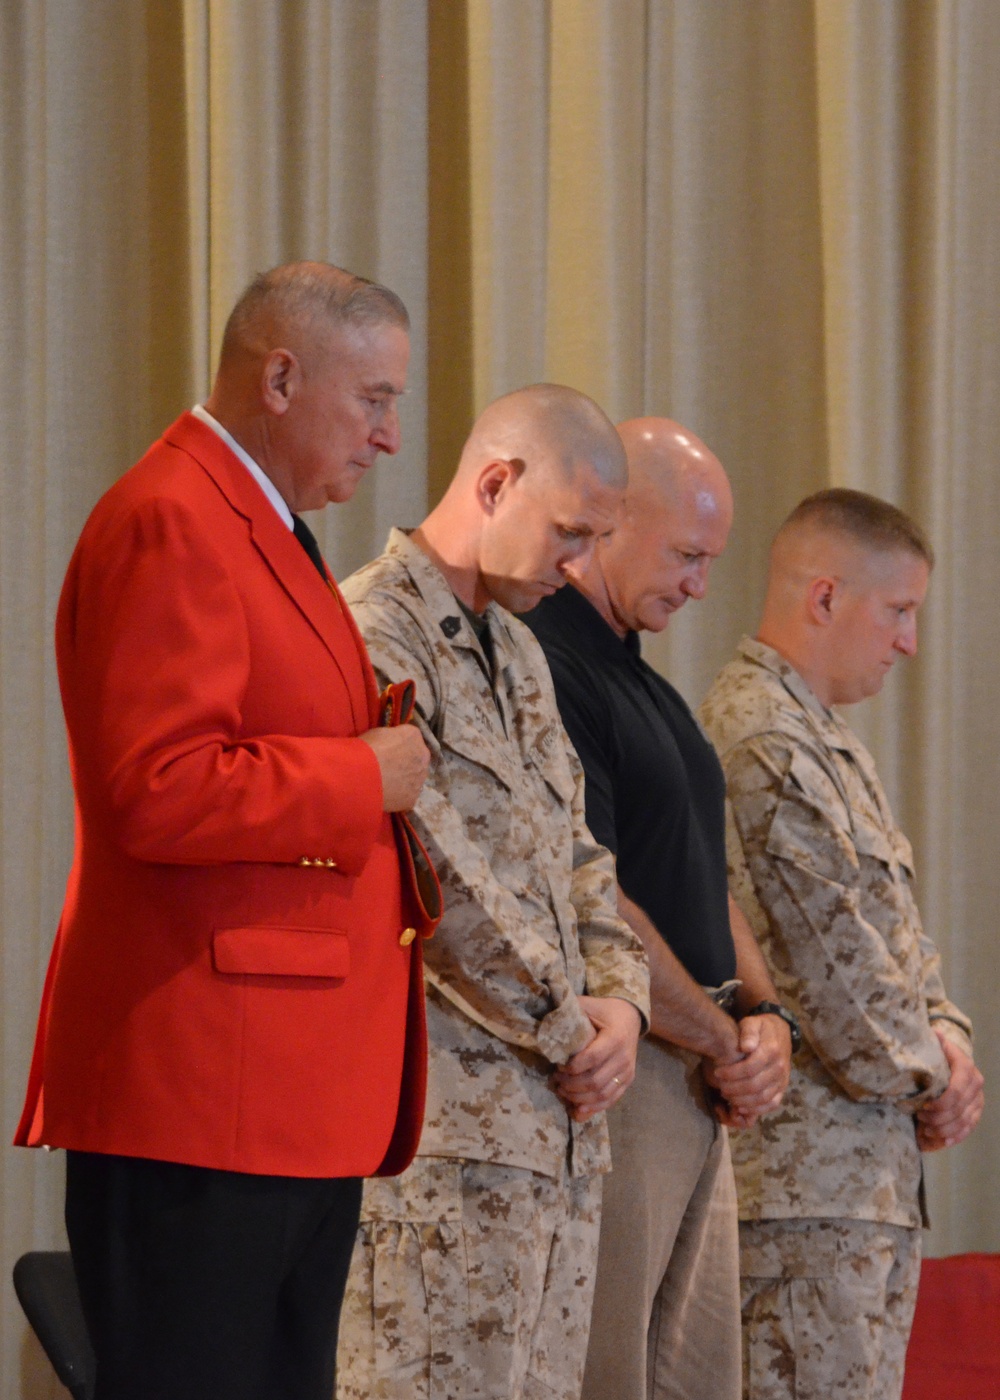 Marine Det deactivates at Bliss, graduates last LAAD class